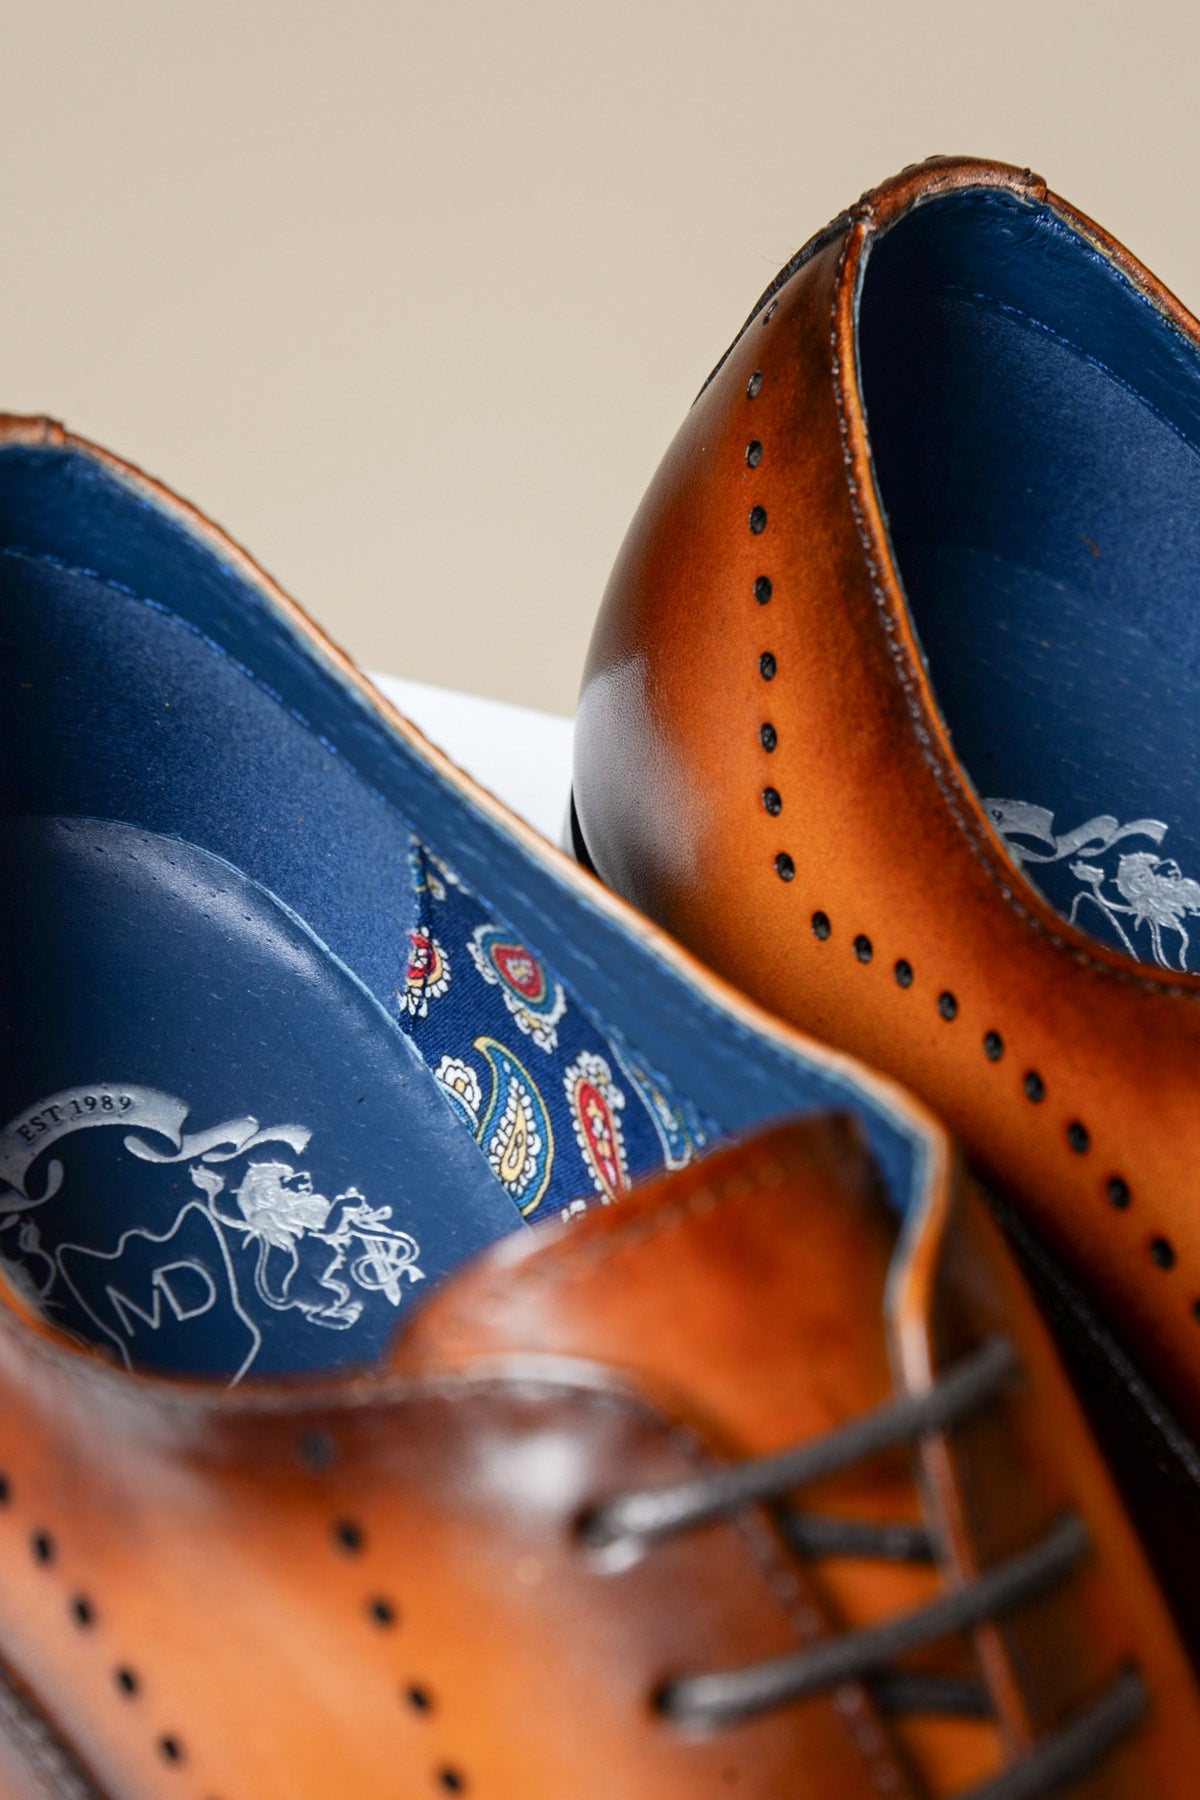 JAKE - Tan Leather Contrast Oxford Shoe